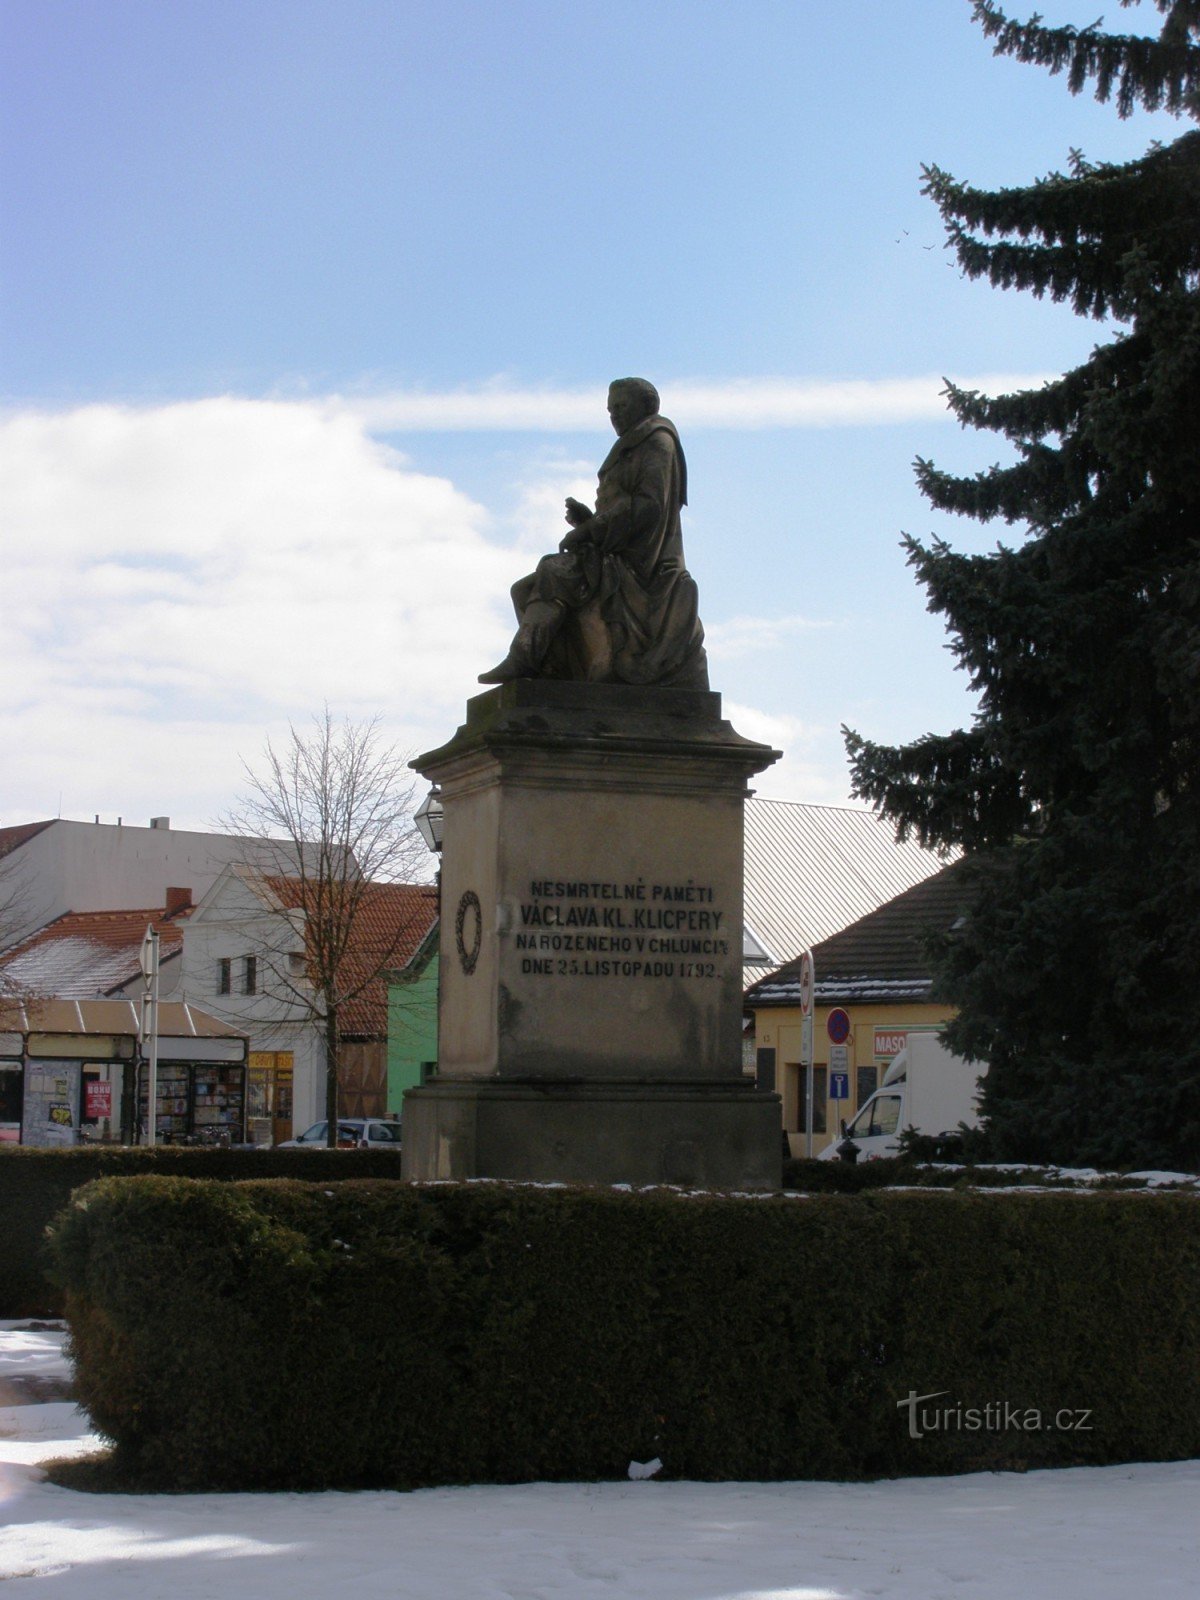 Chlumec nad Cidlinou - Václav Kliment Klicpera の記念碑